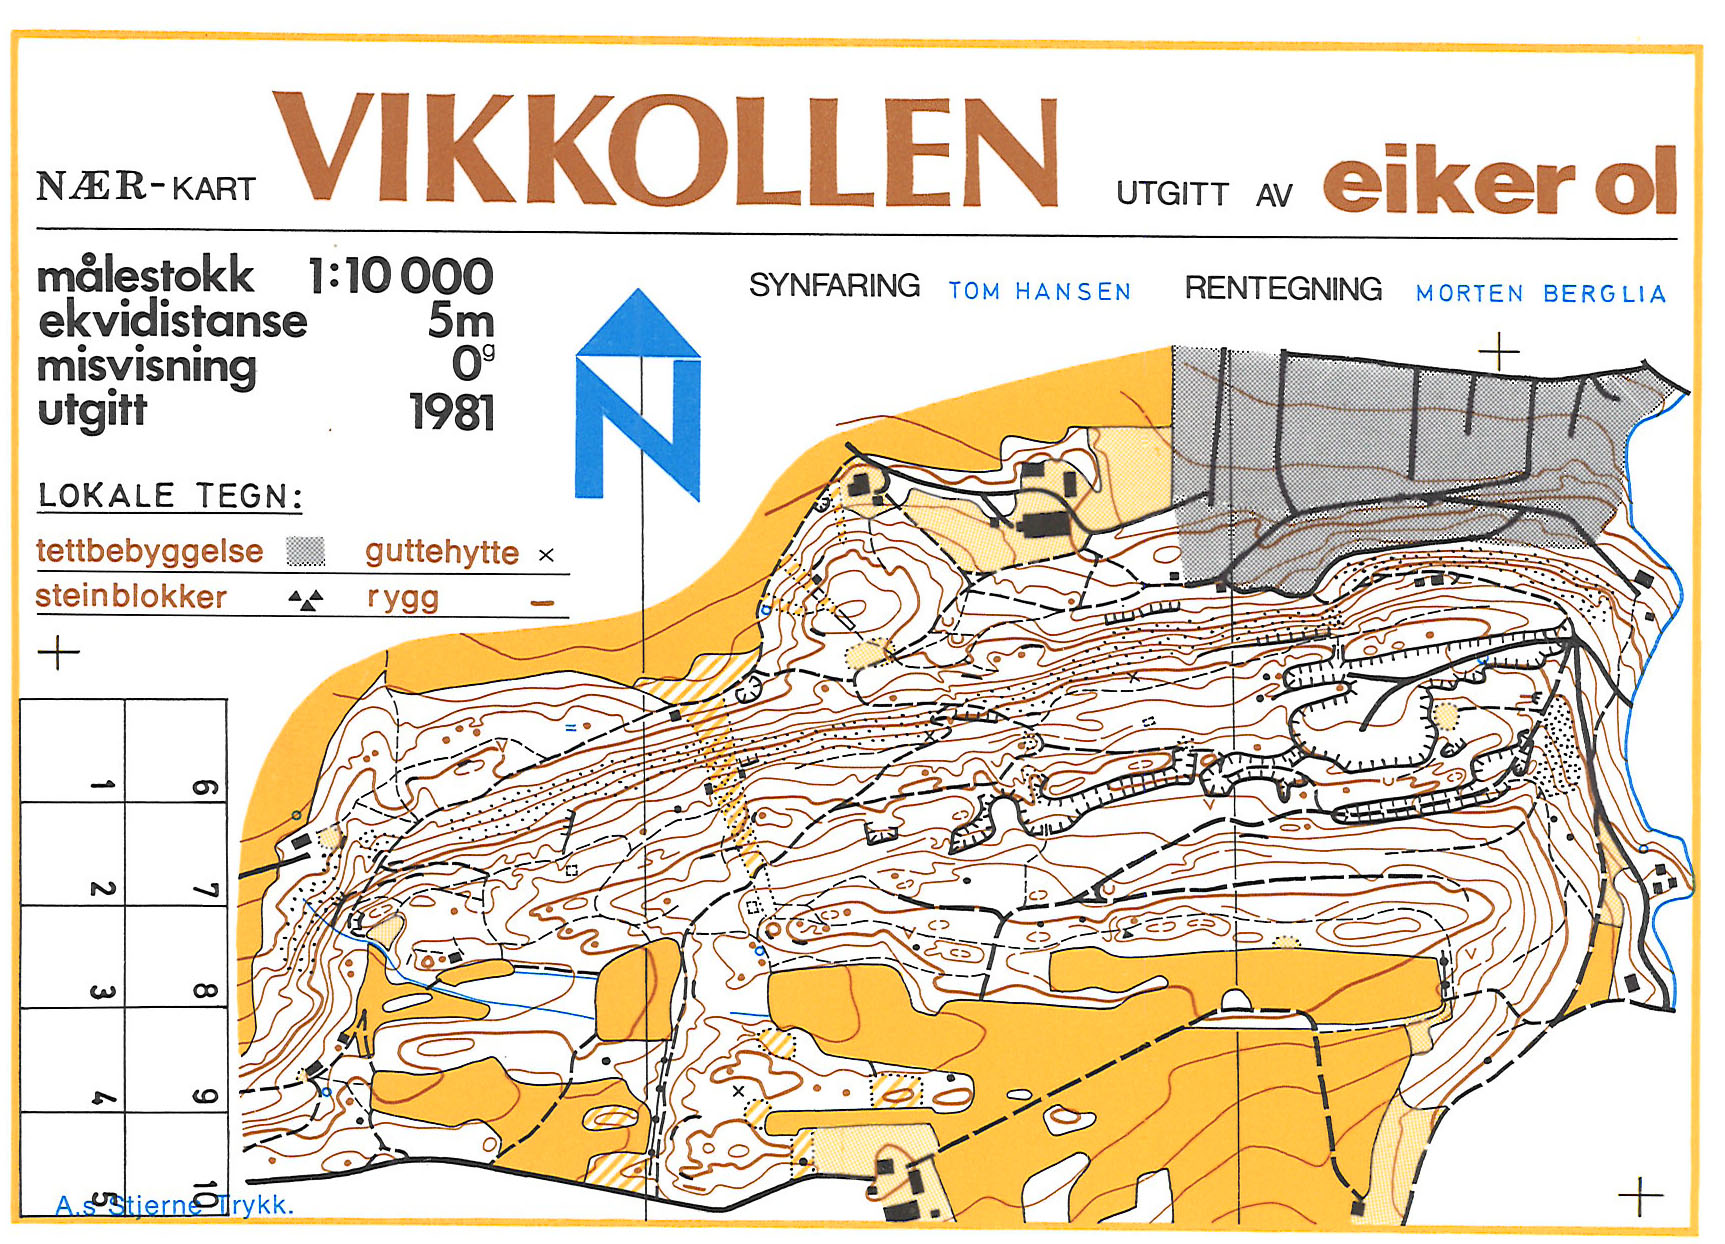 Vikkollen (1981-01-01)